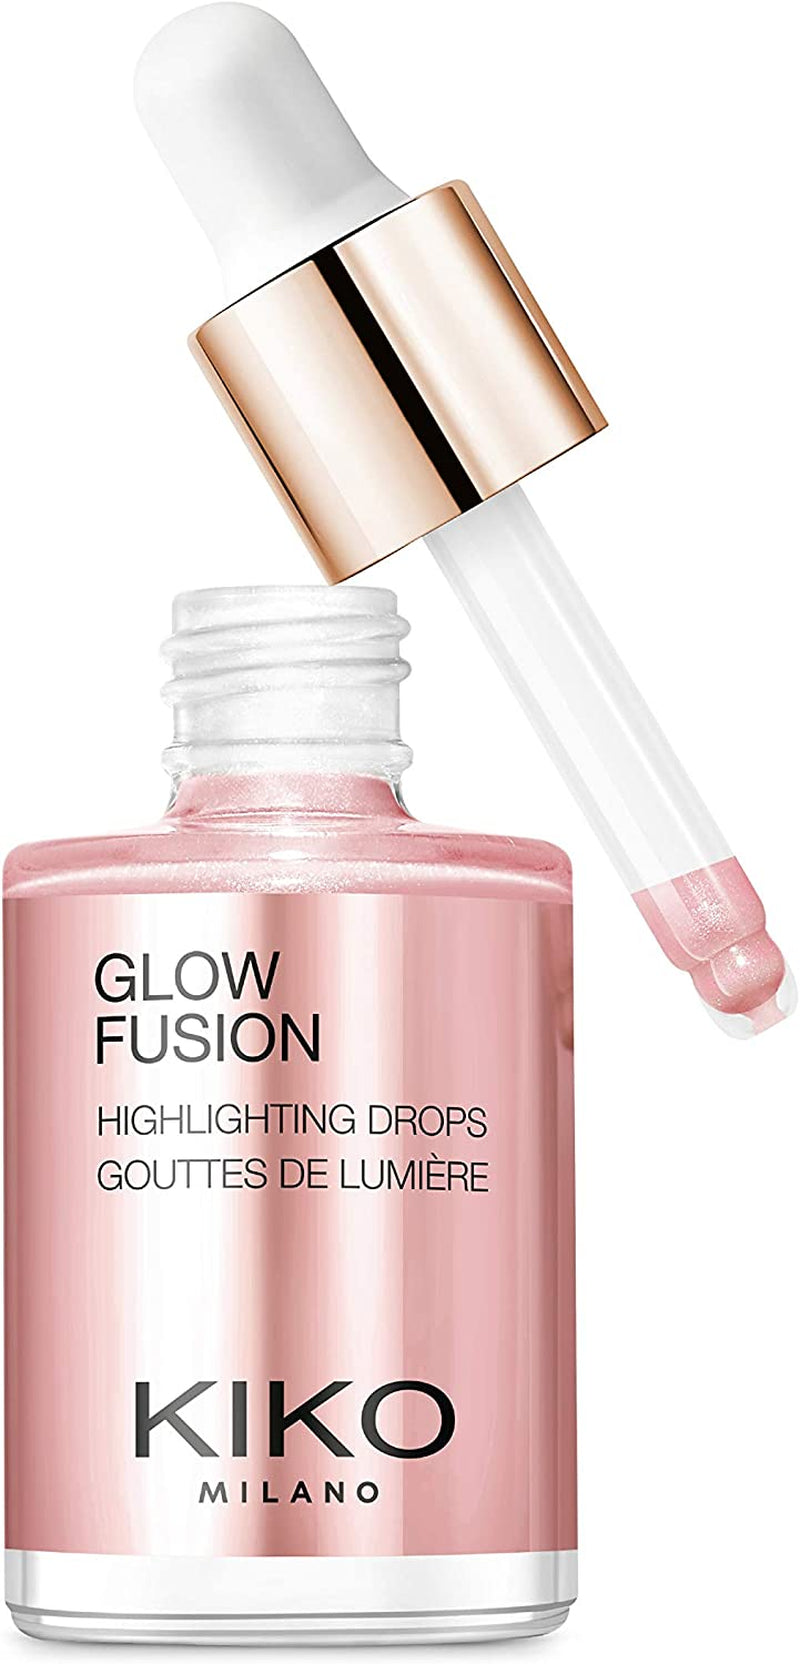 KIKO Milano Glow Fusion Highlighting Drops 01 | Liquid Face Highlighter with a Metallic Finish